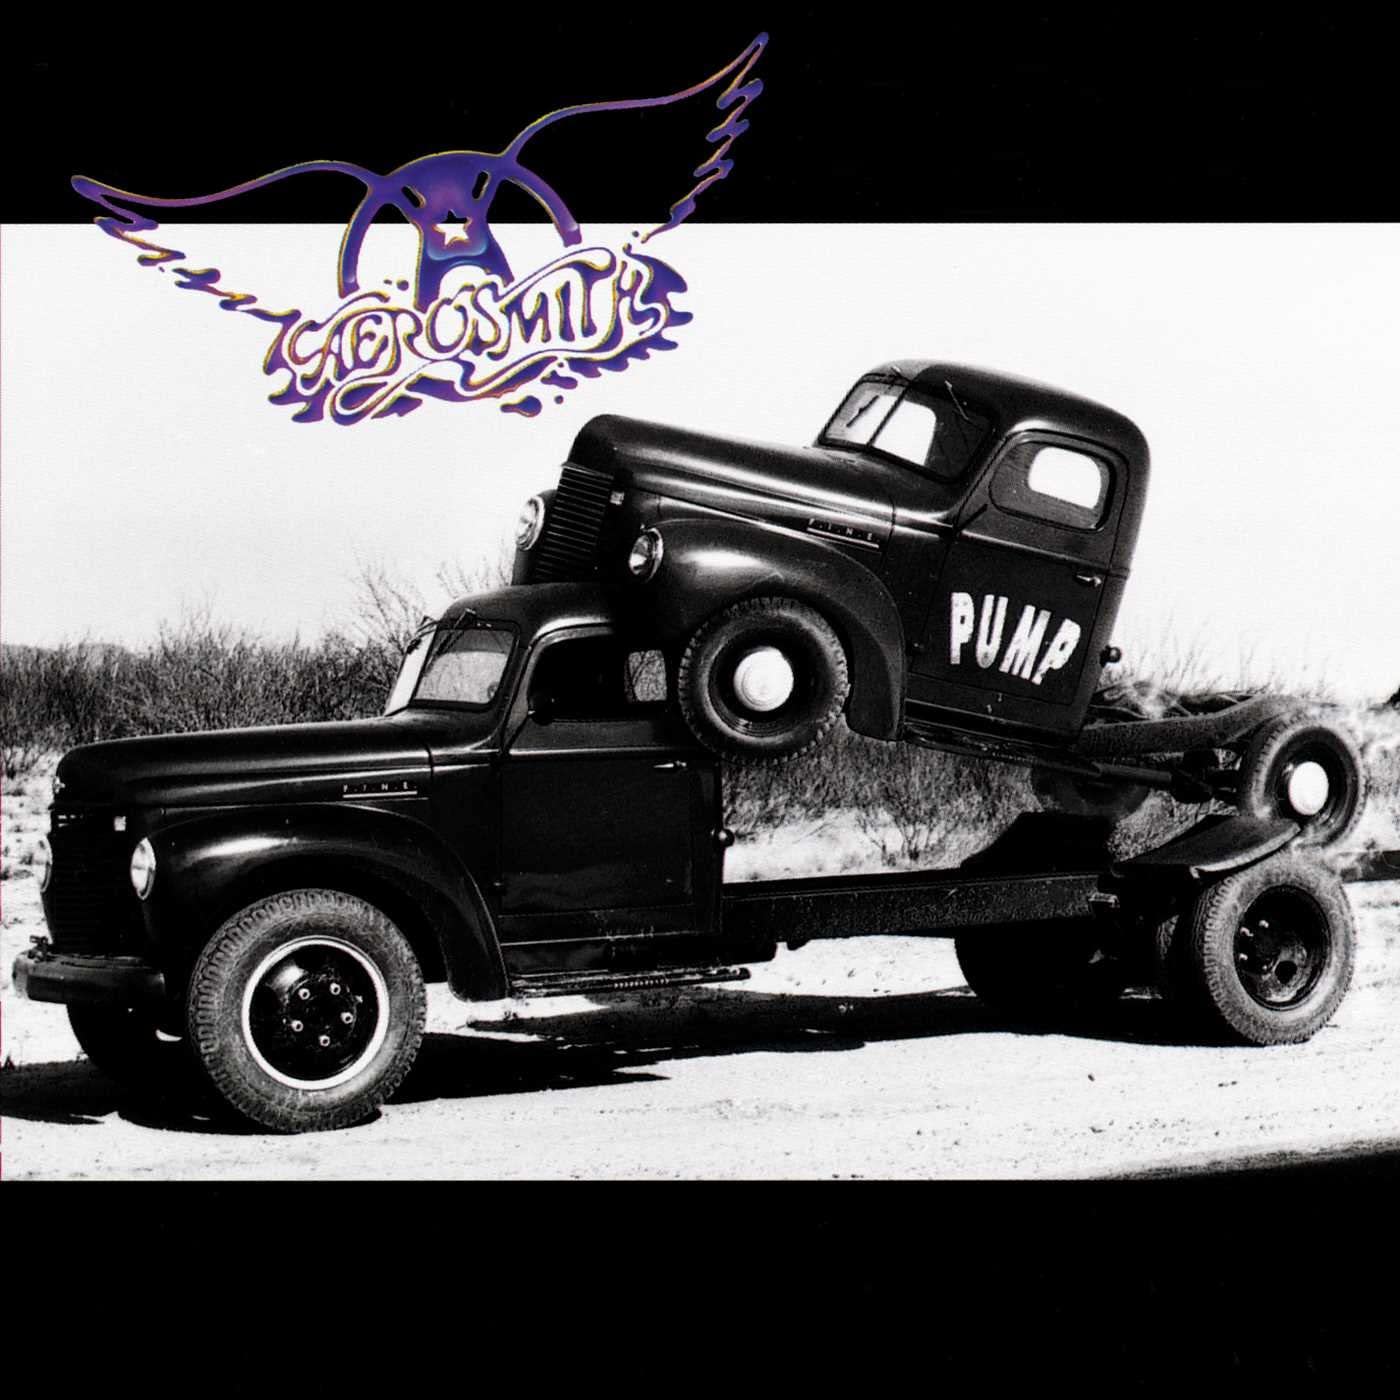 Aerosmith - Pump:CD (Pre-loved & Refurbed)